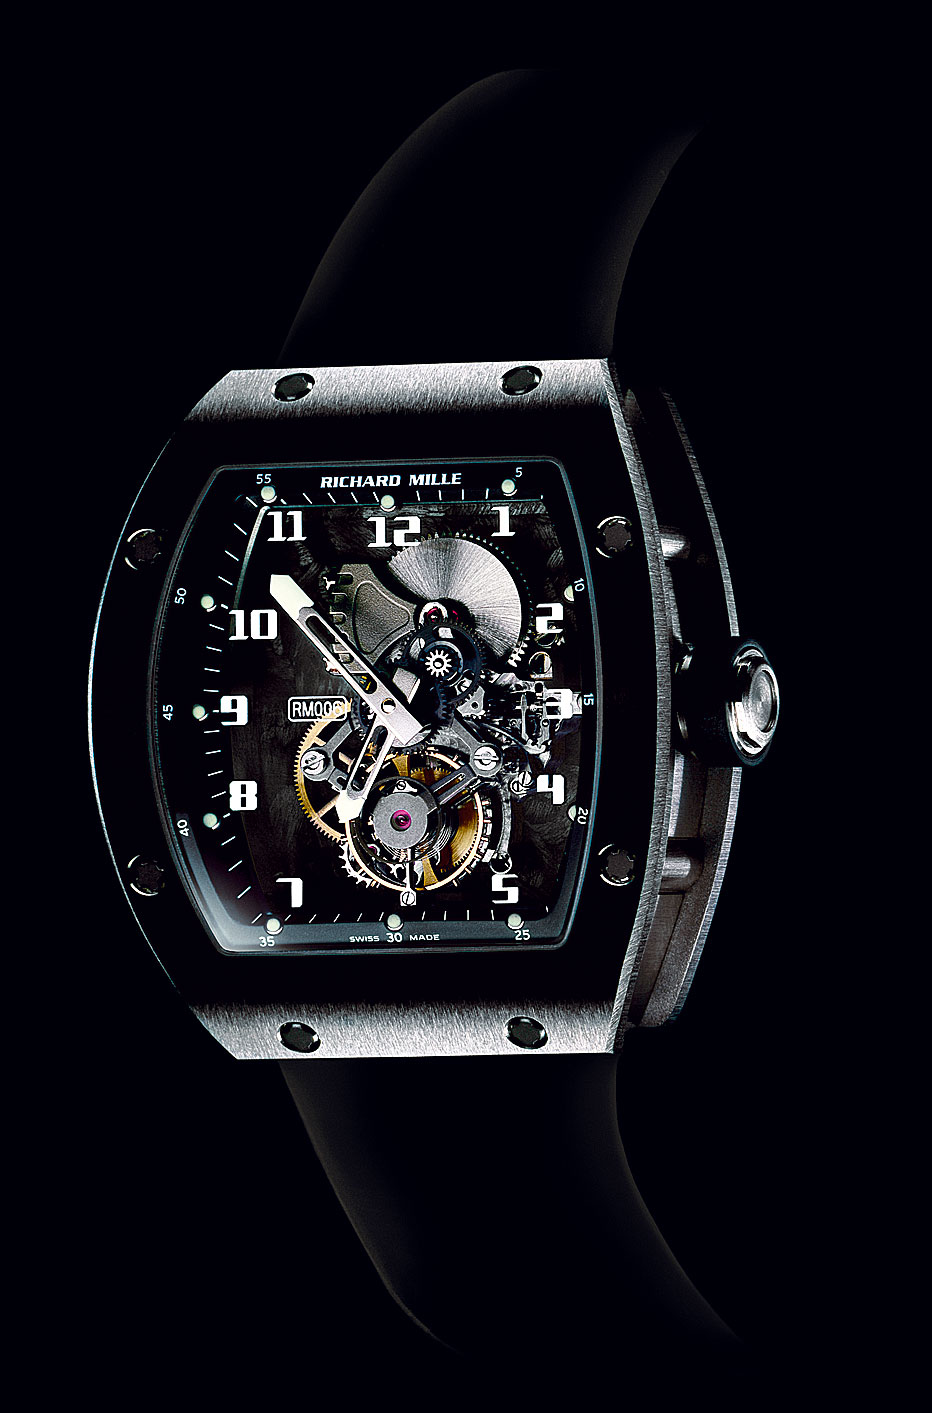 Replica Richard Mille RM 006 Titanium Watch